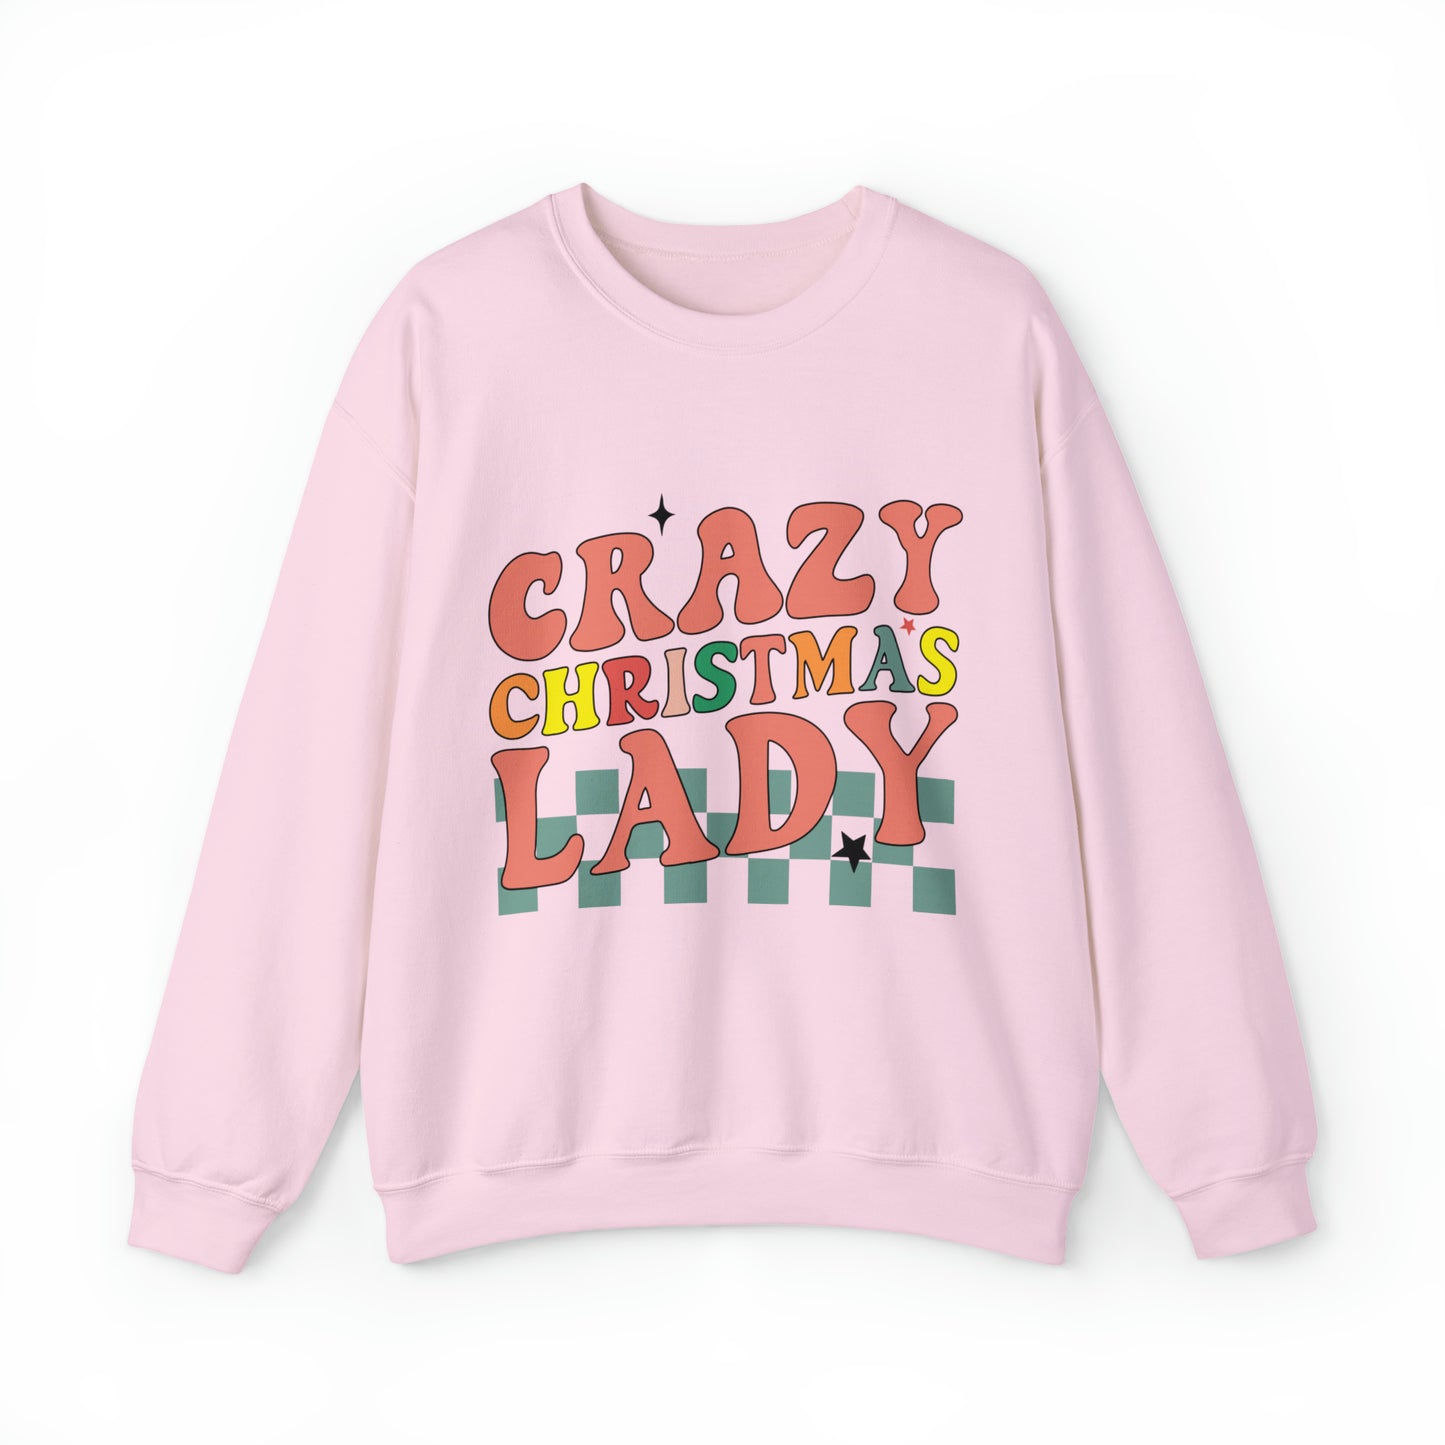 Crazy Christmas Lady Women's Funny Christmas Crewneck Sweatshirt